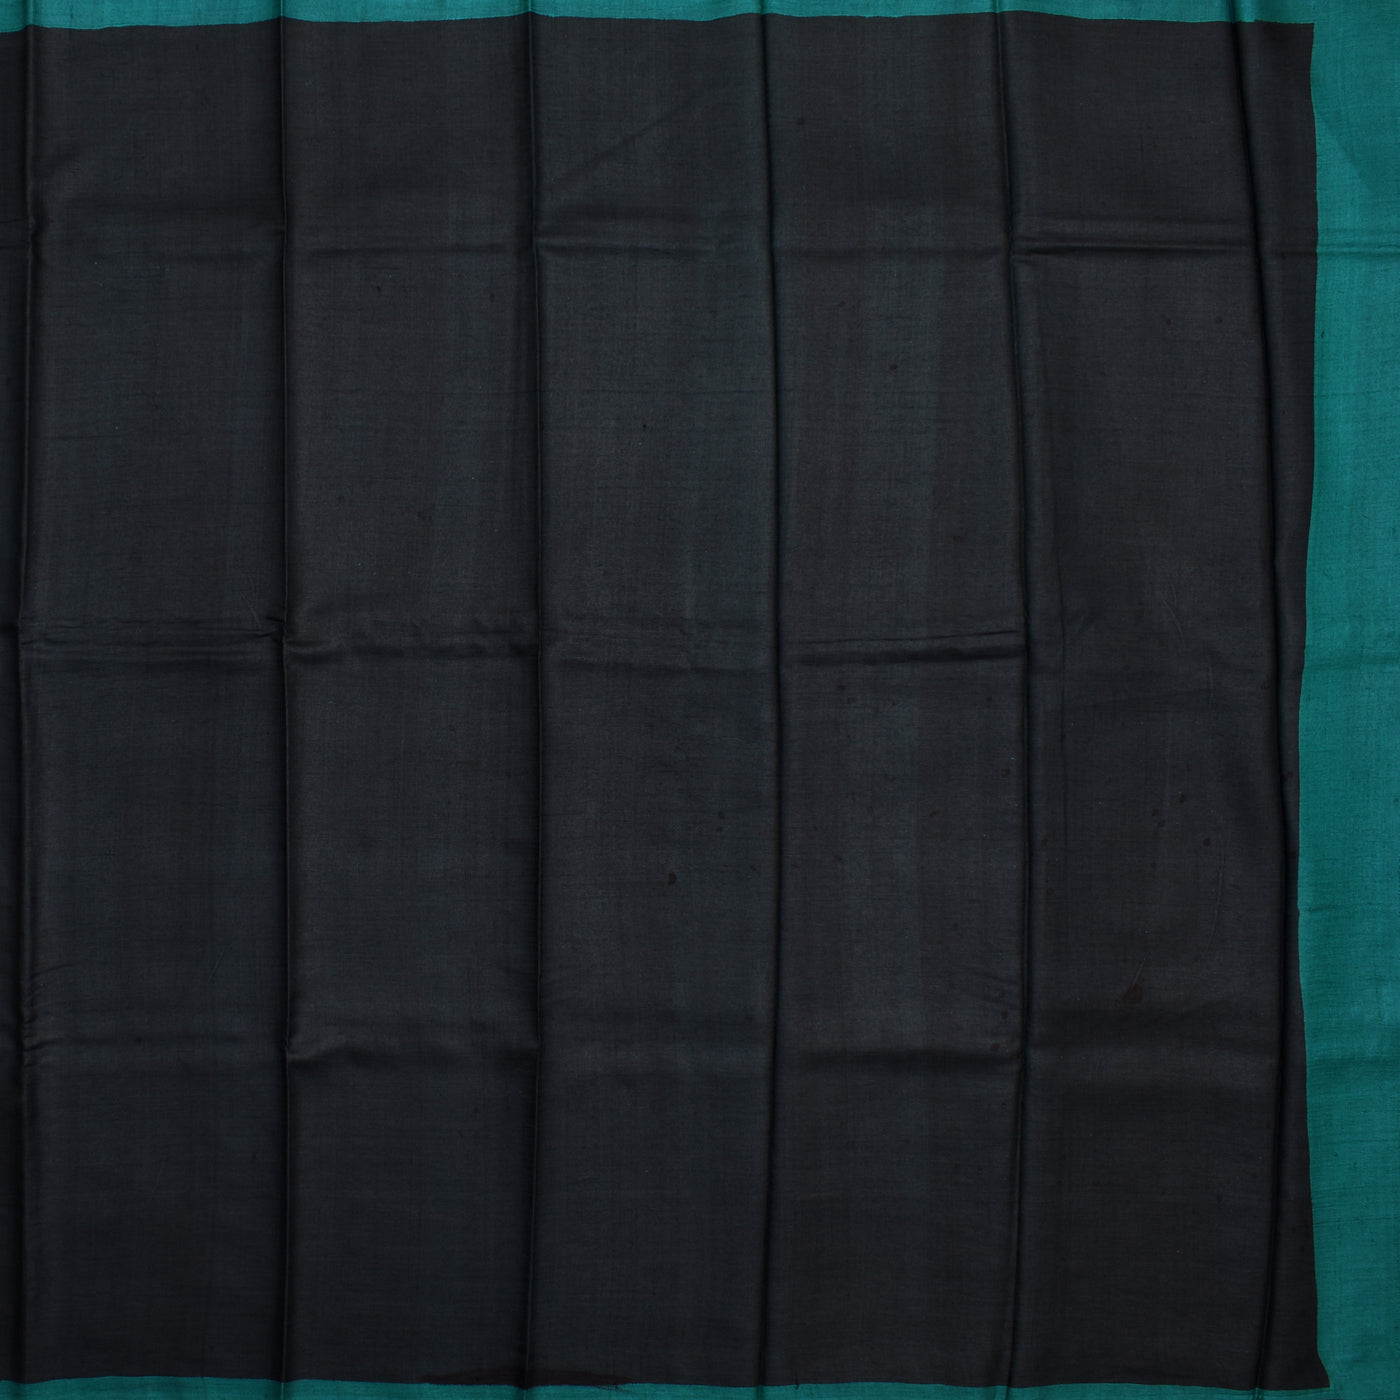 Black Tussar Silk Saree with Small Print Design